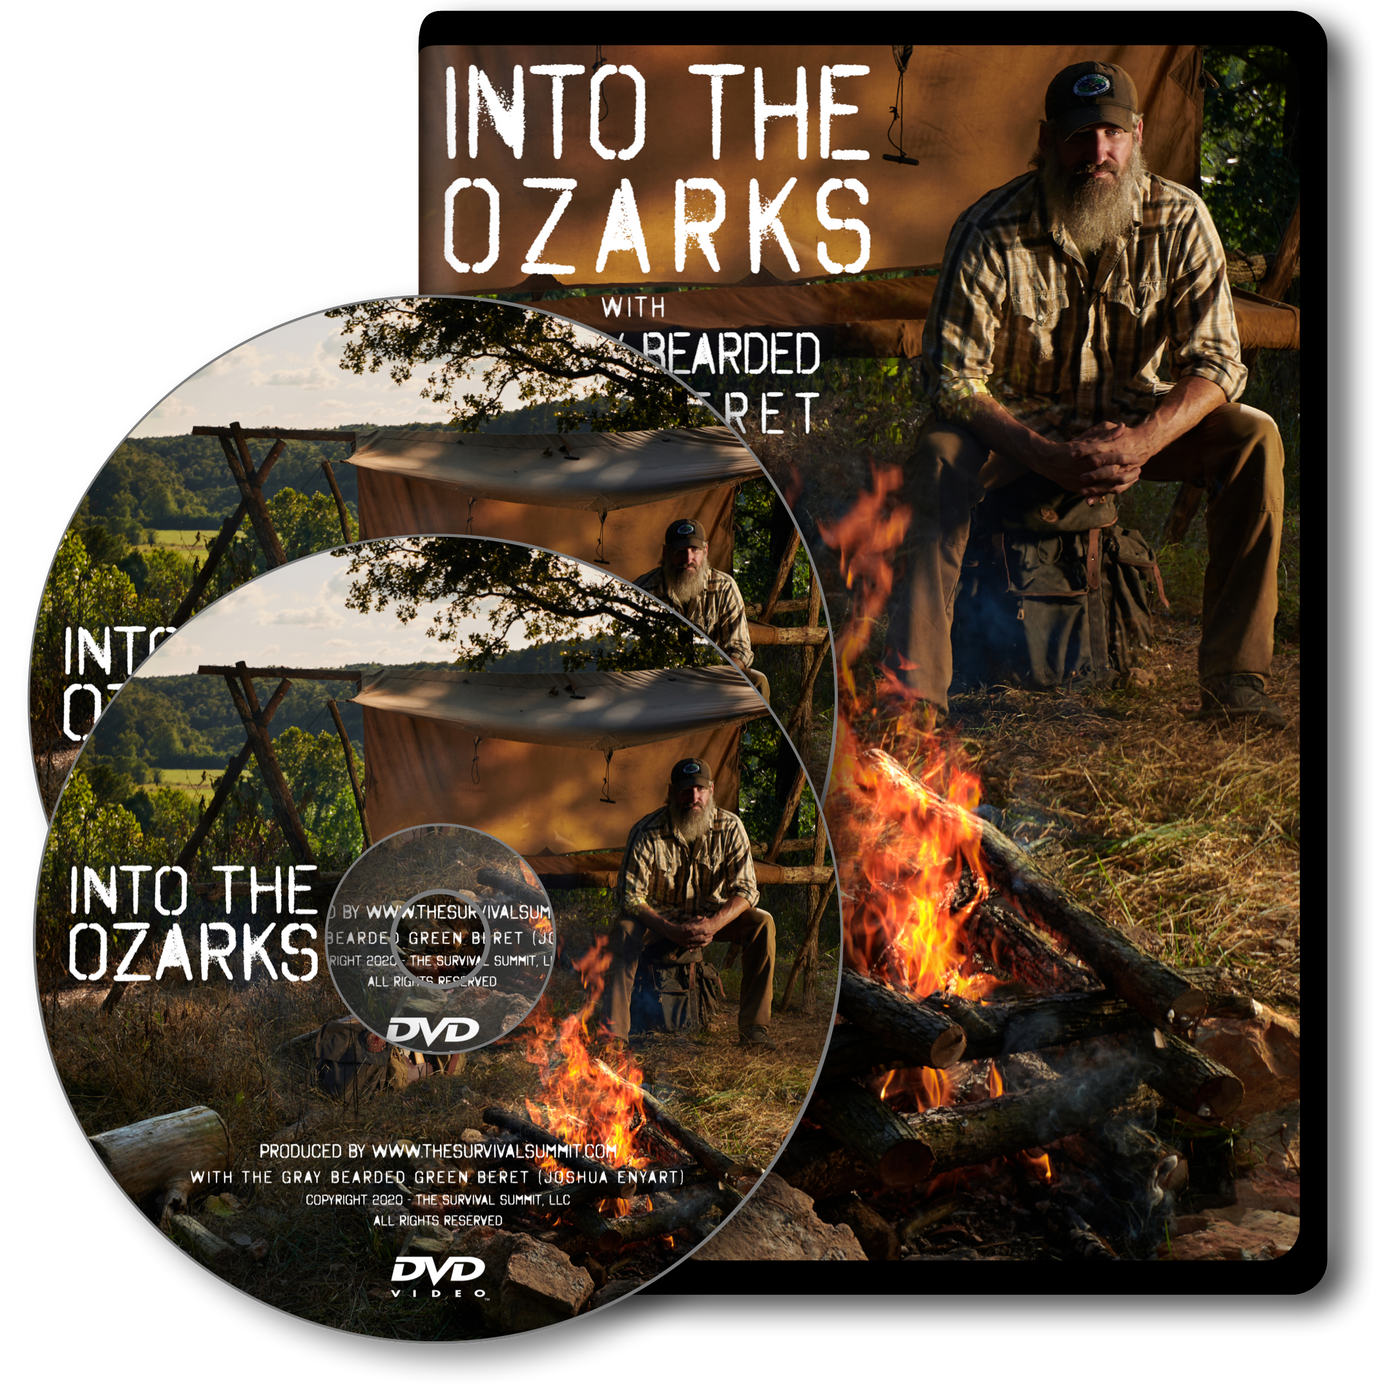 Into the Ozarks DVD & USB